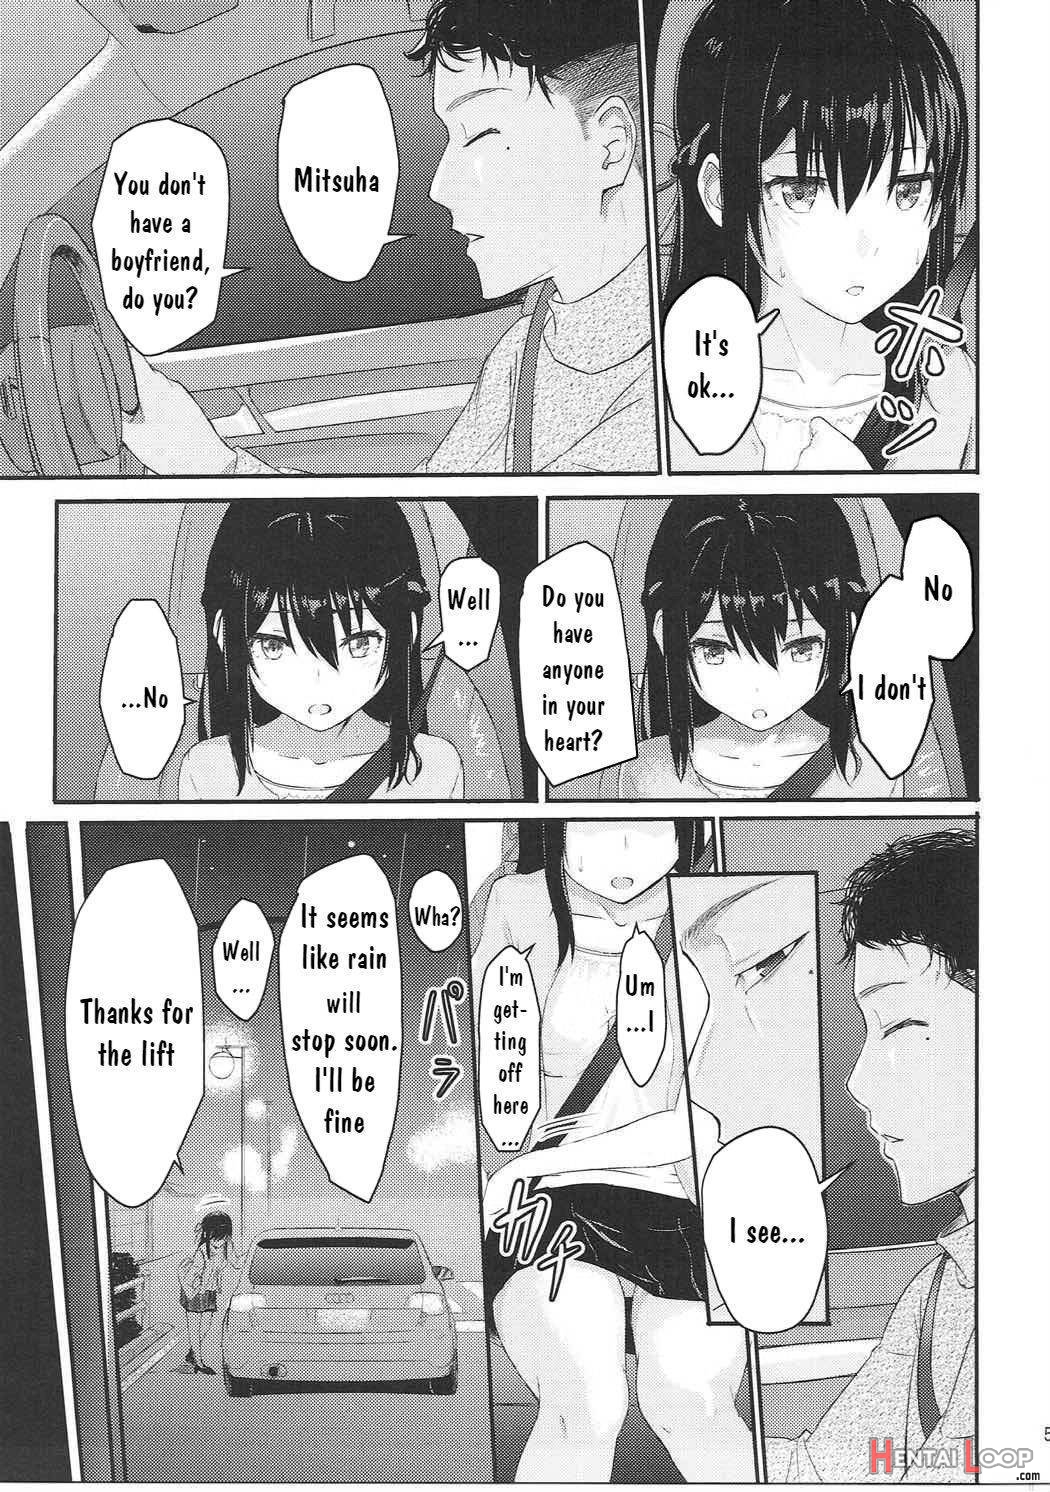 Mitsuha ~netorare~ page 4